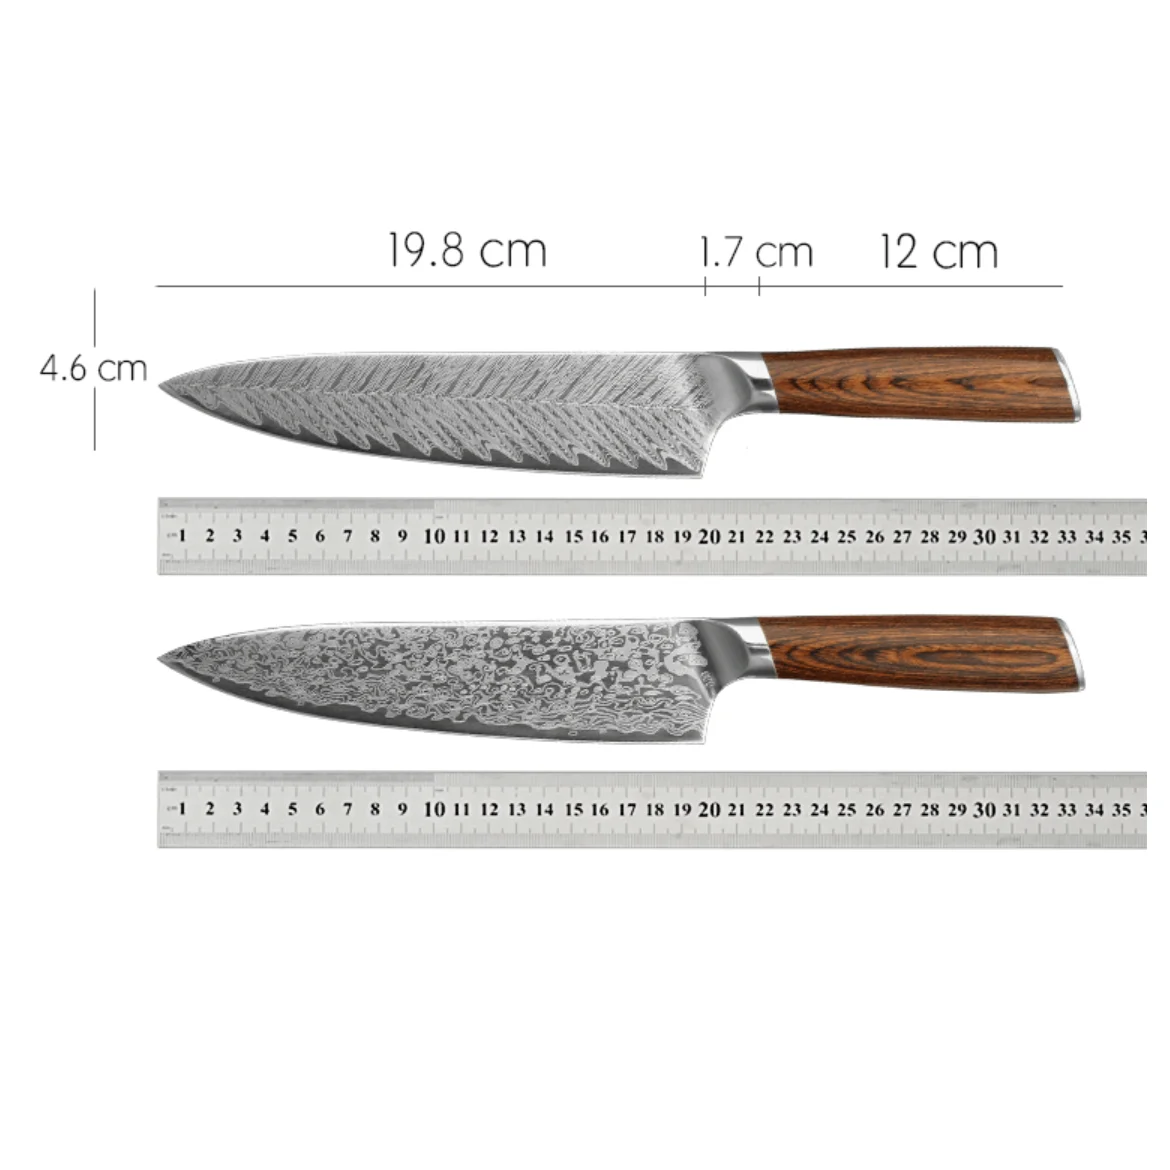 Buy Wholesale China Keemake Chef Knife 8 Inch Very Sharp Damascus